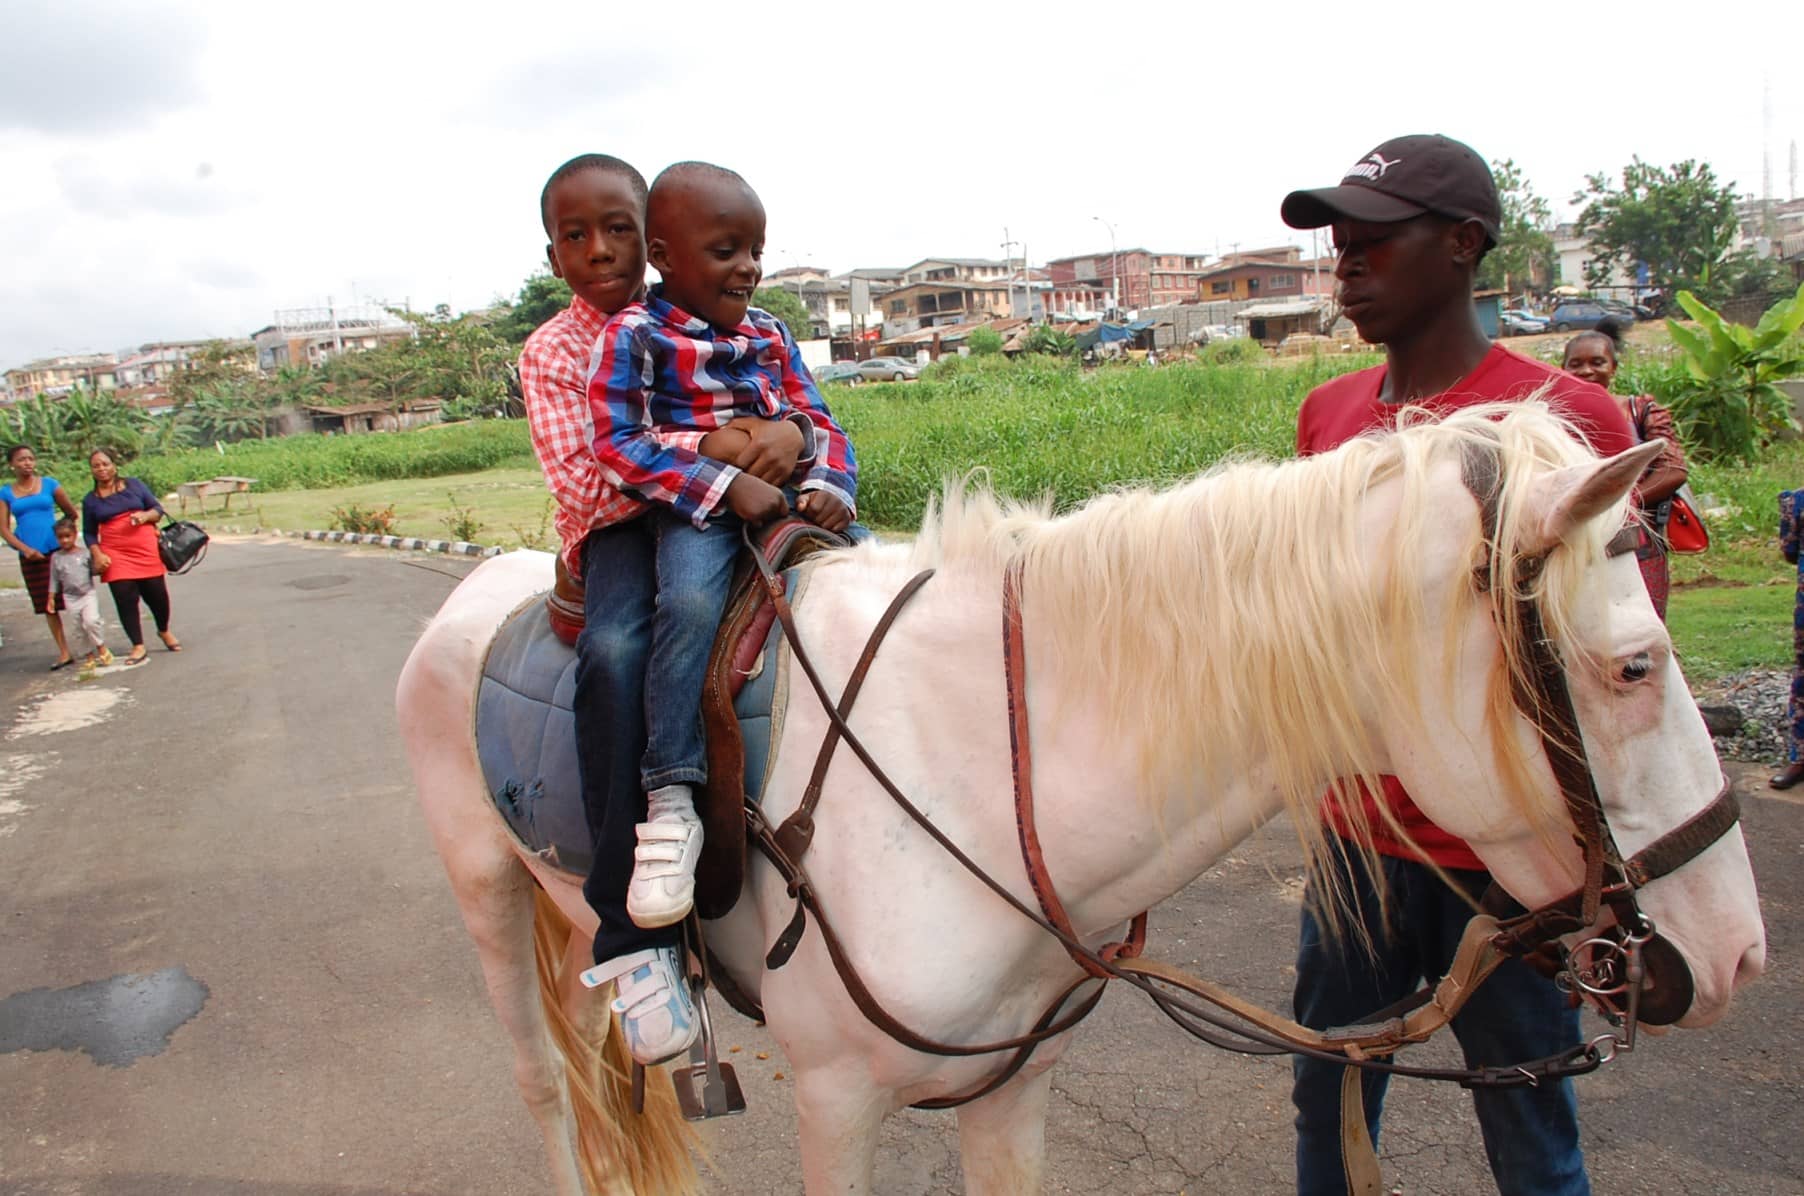 Participants also enjoyed horseback riding at the funfair